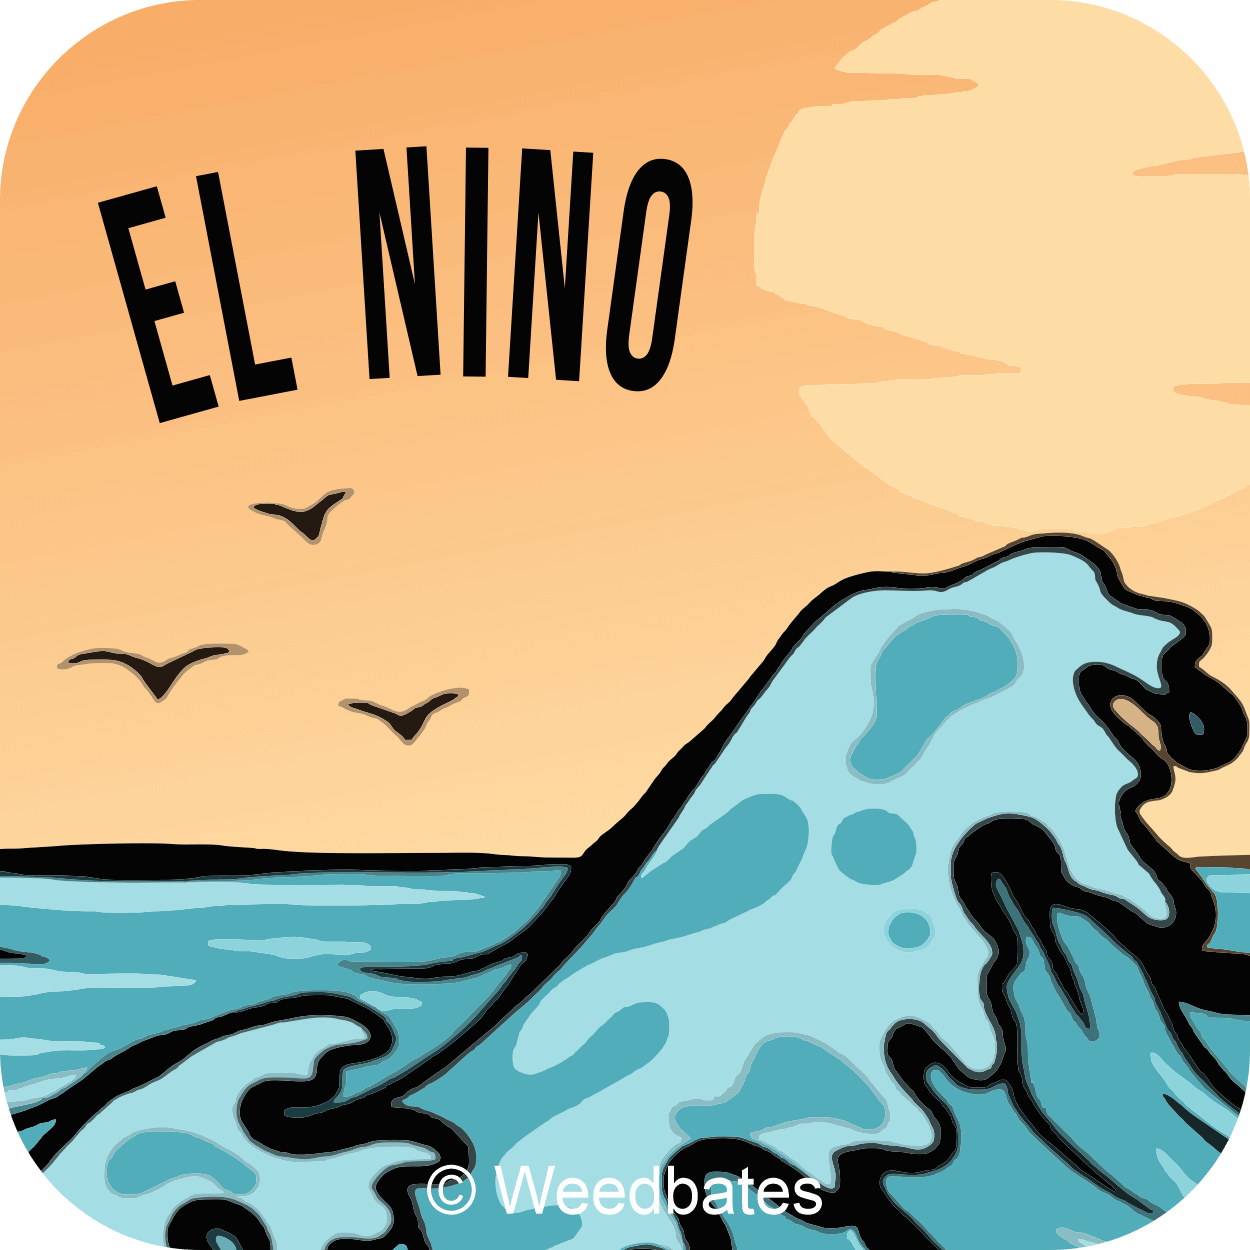 El Nino strain